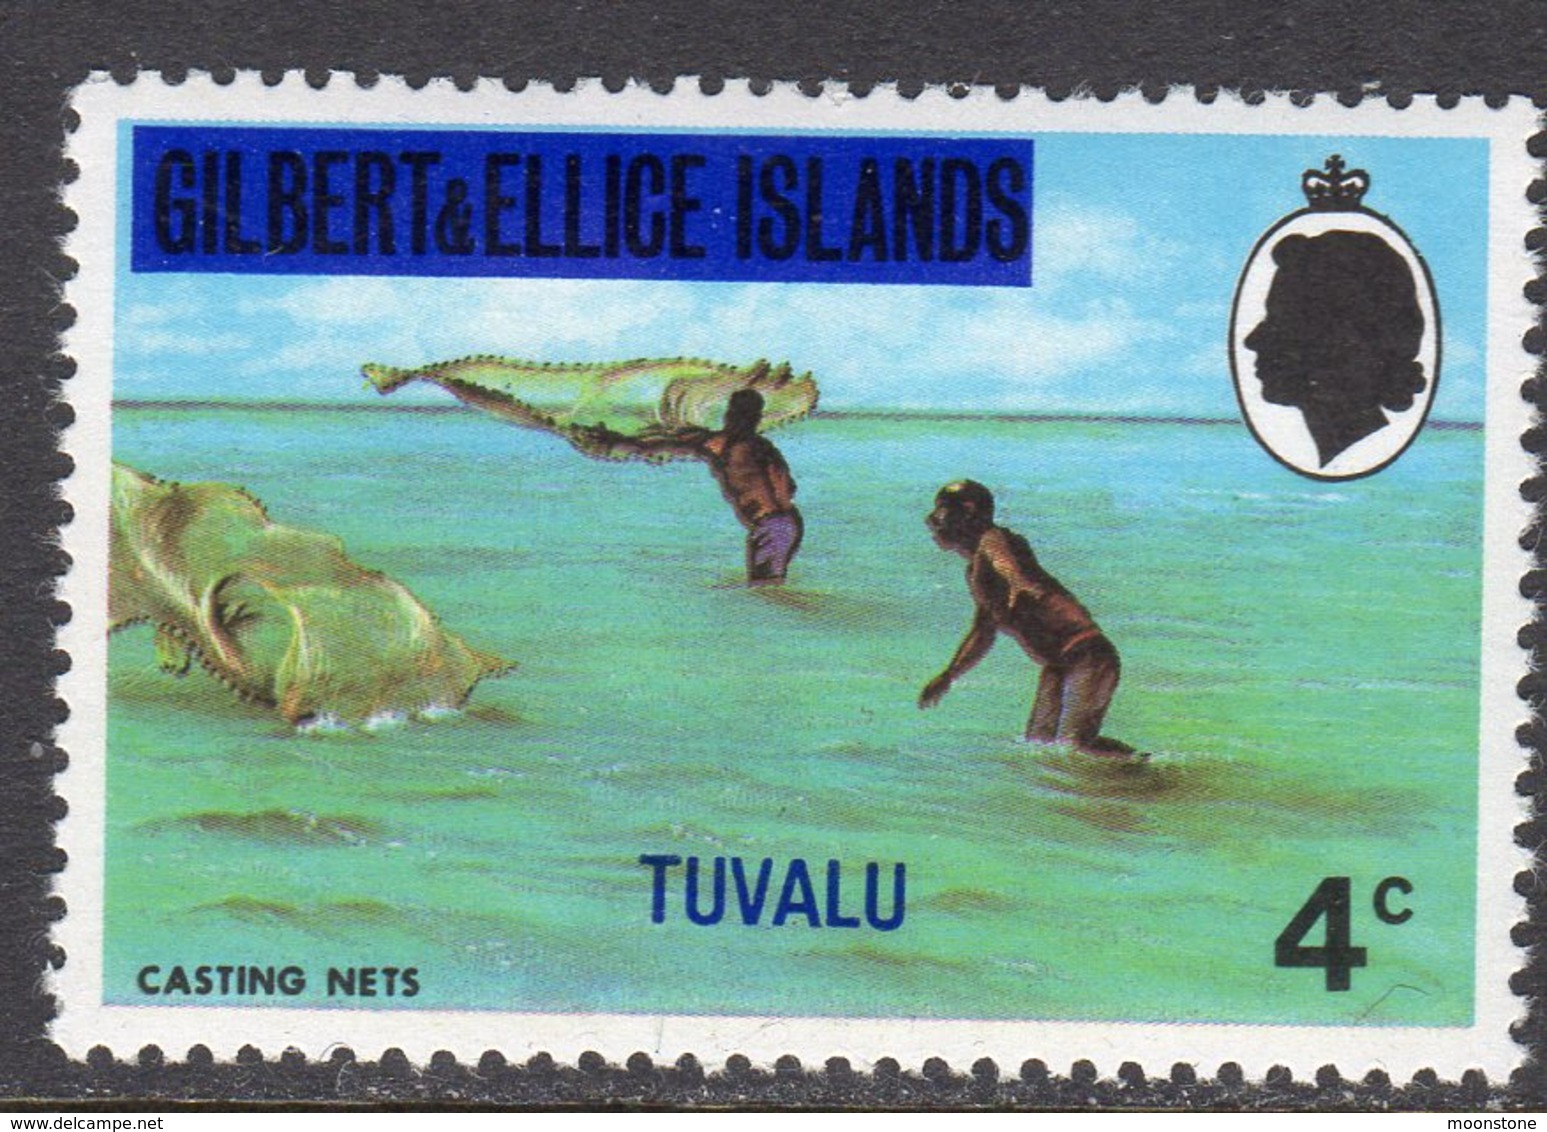 Tuvalu 1976 Definitive Overprints 4c Value, Wmk. Multiple Crown CA Sideways, MNH, SG 22 (BP2) - Tuvalu